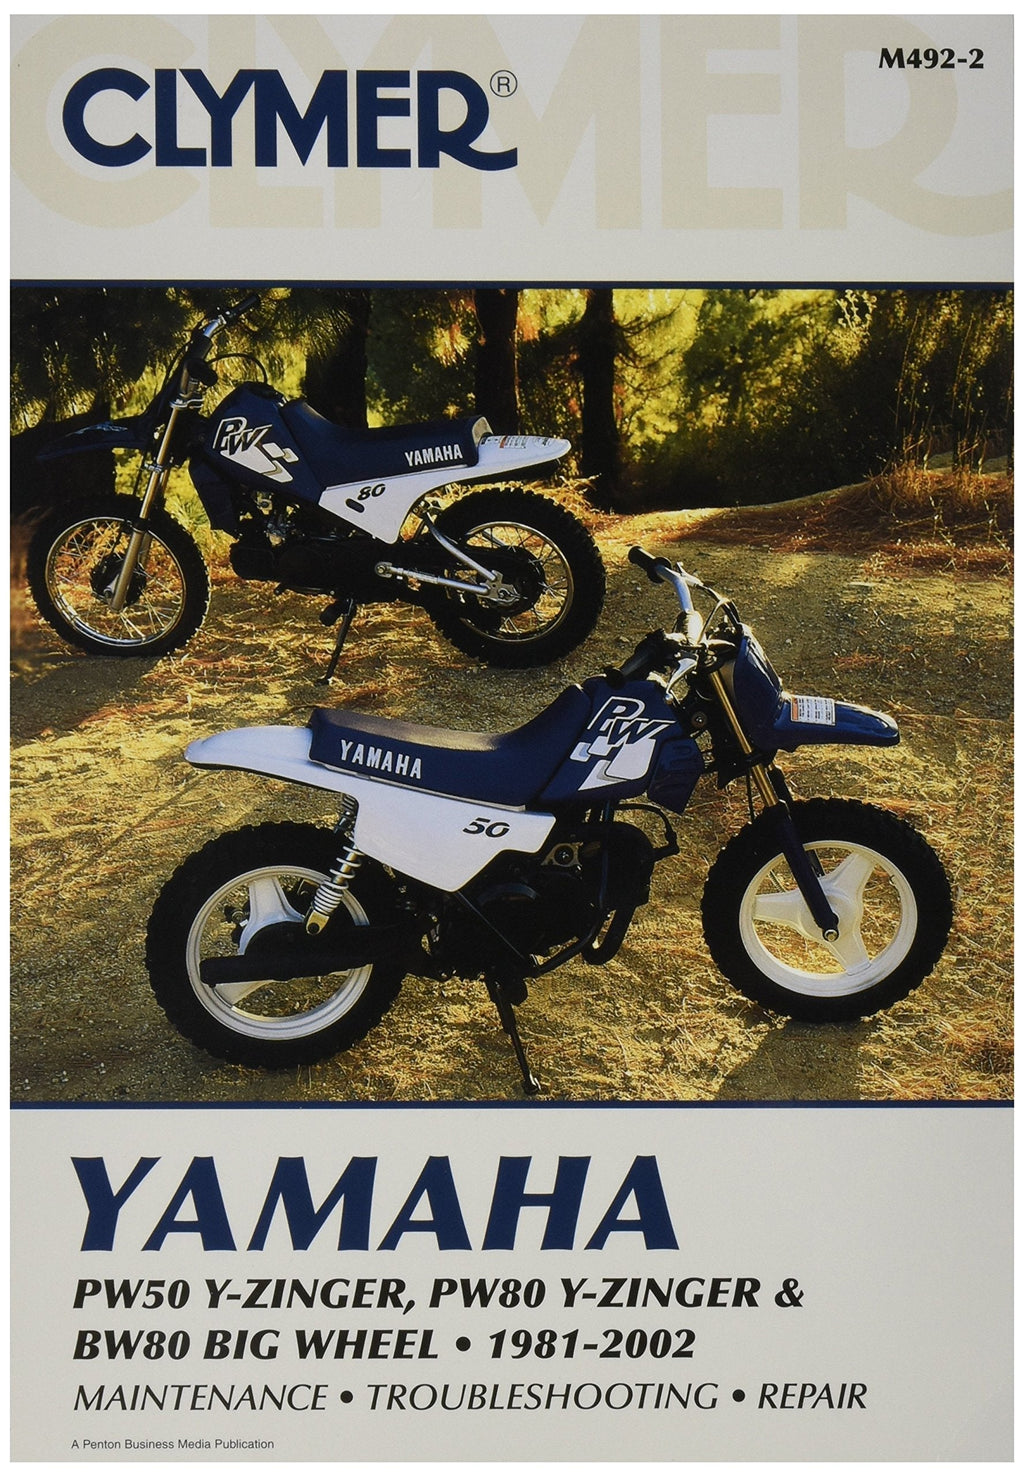  [AUSTRALIA] - Clymer Yamaha Manual M492-2